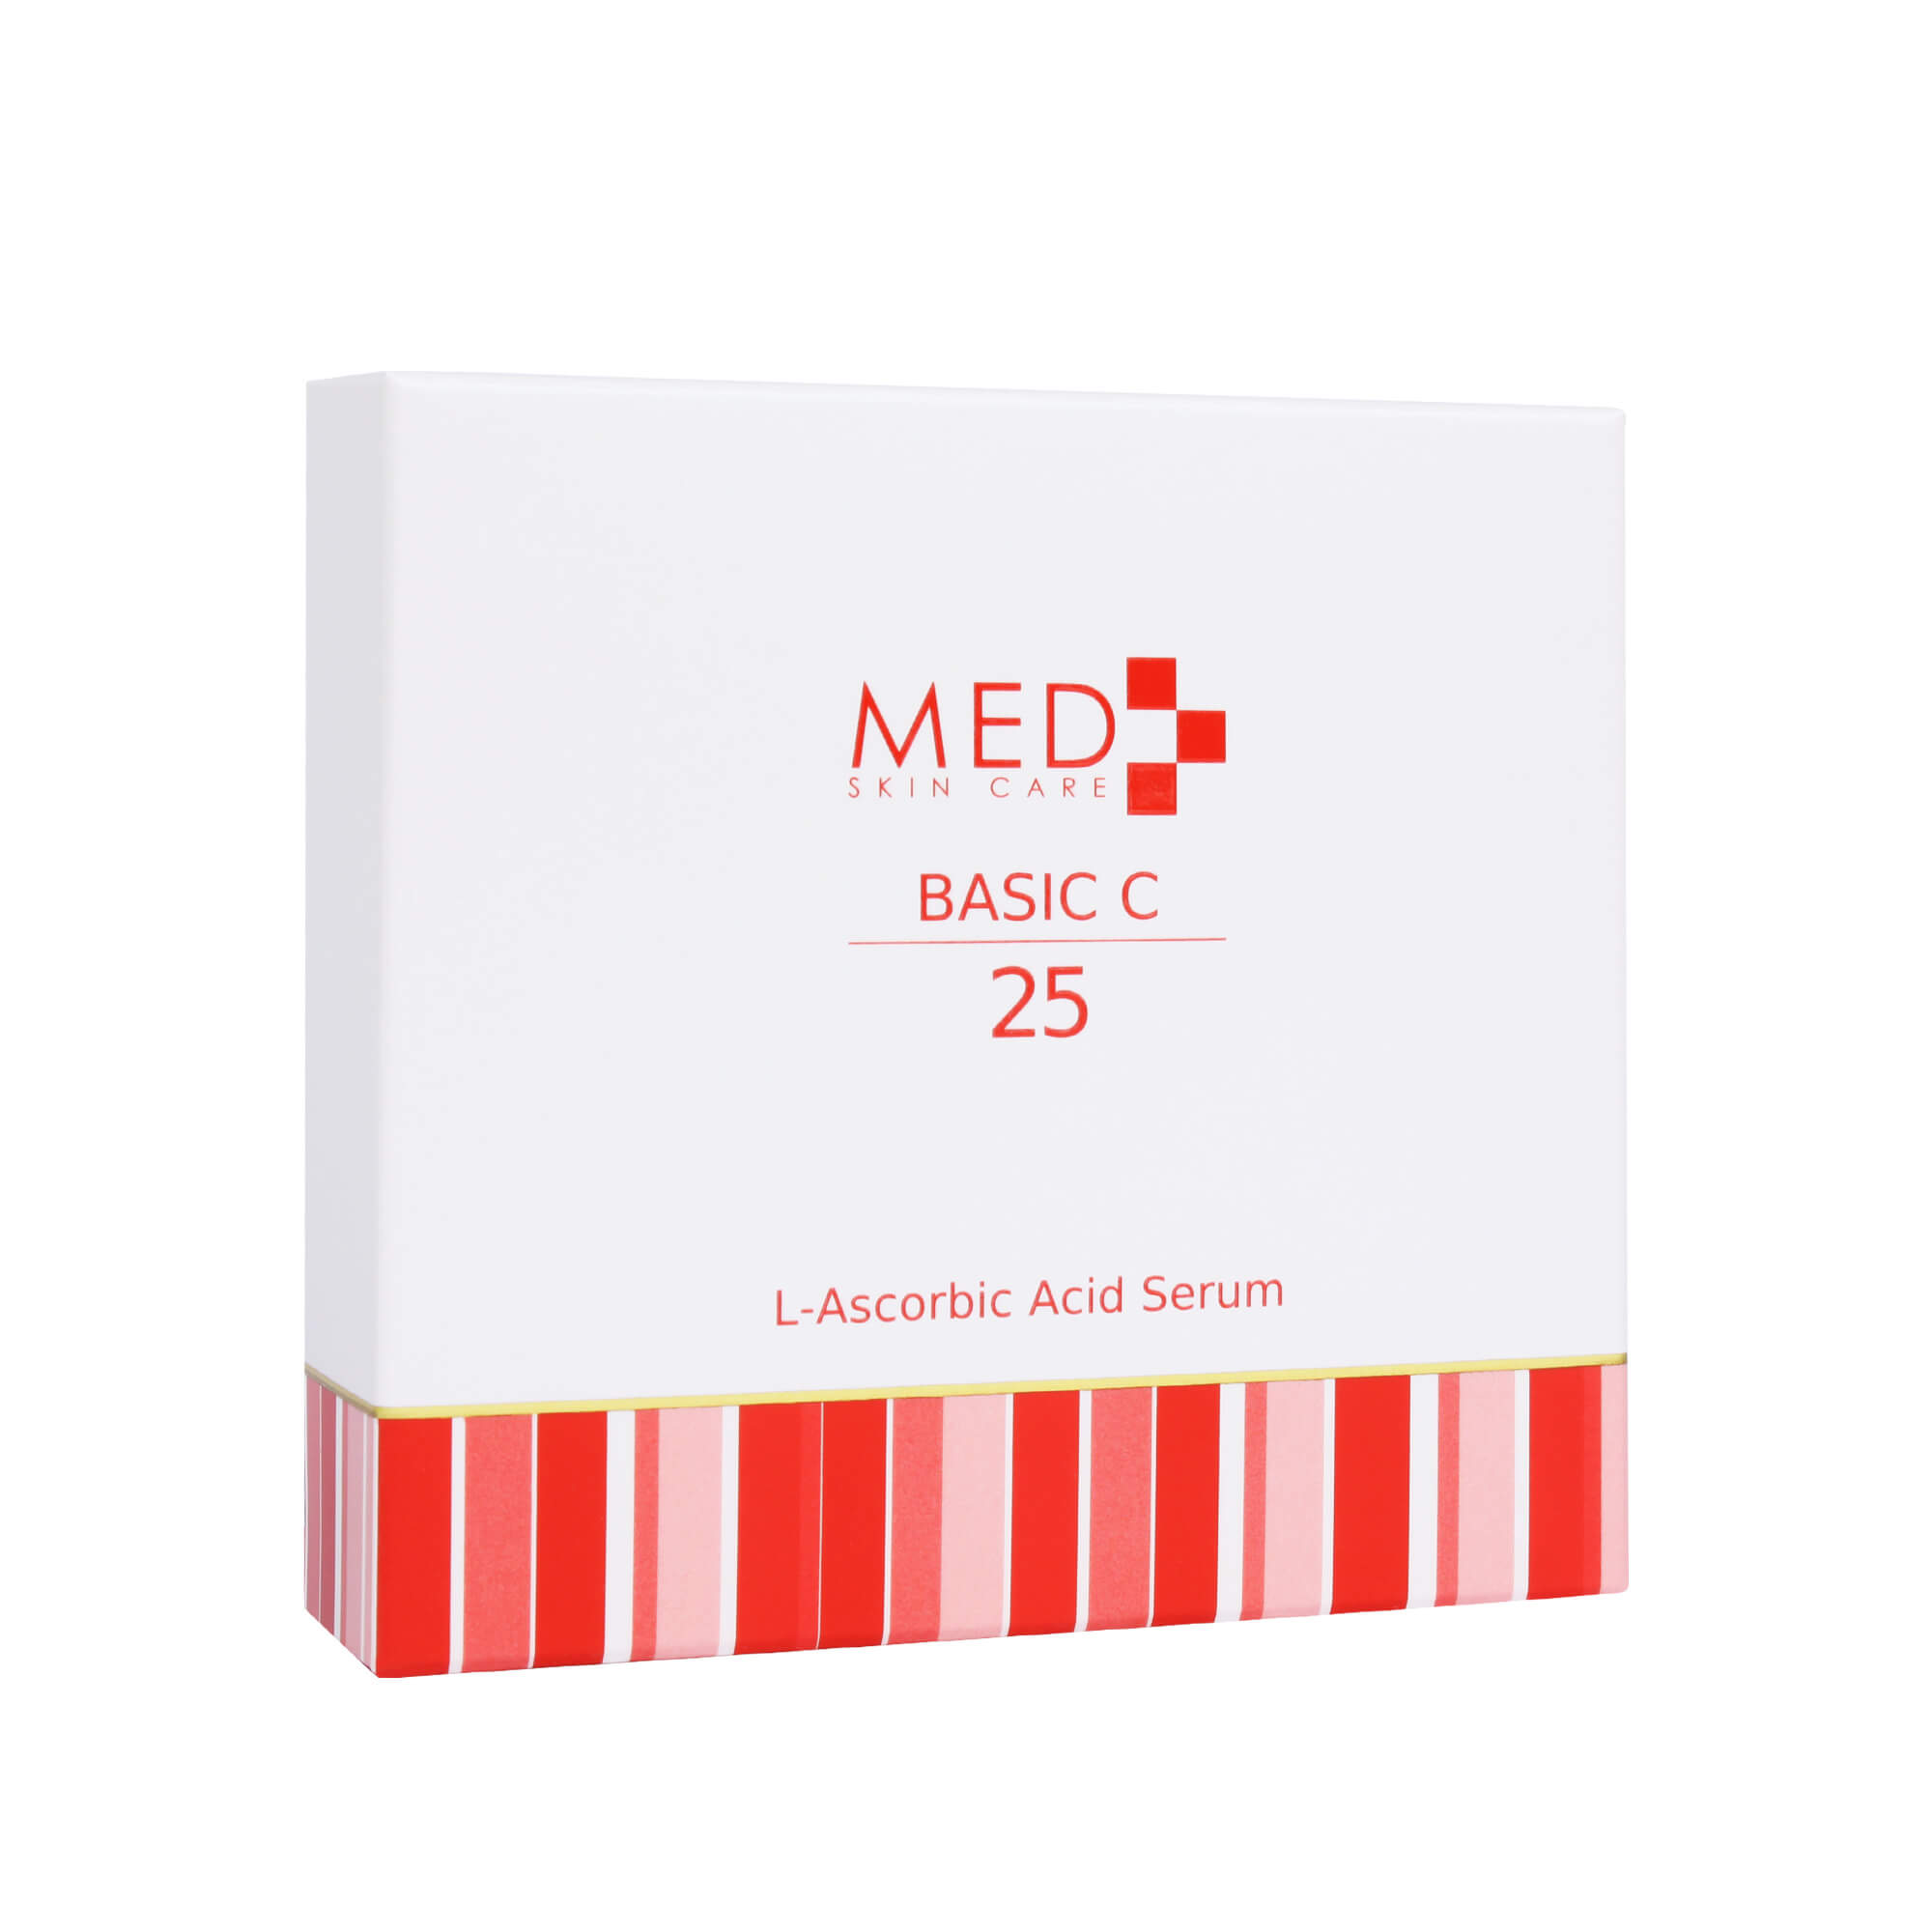 MED Skin Care BASIC C 25 L-Ascorbic Acid Serum 5 ml＊2